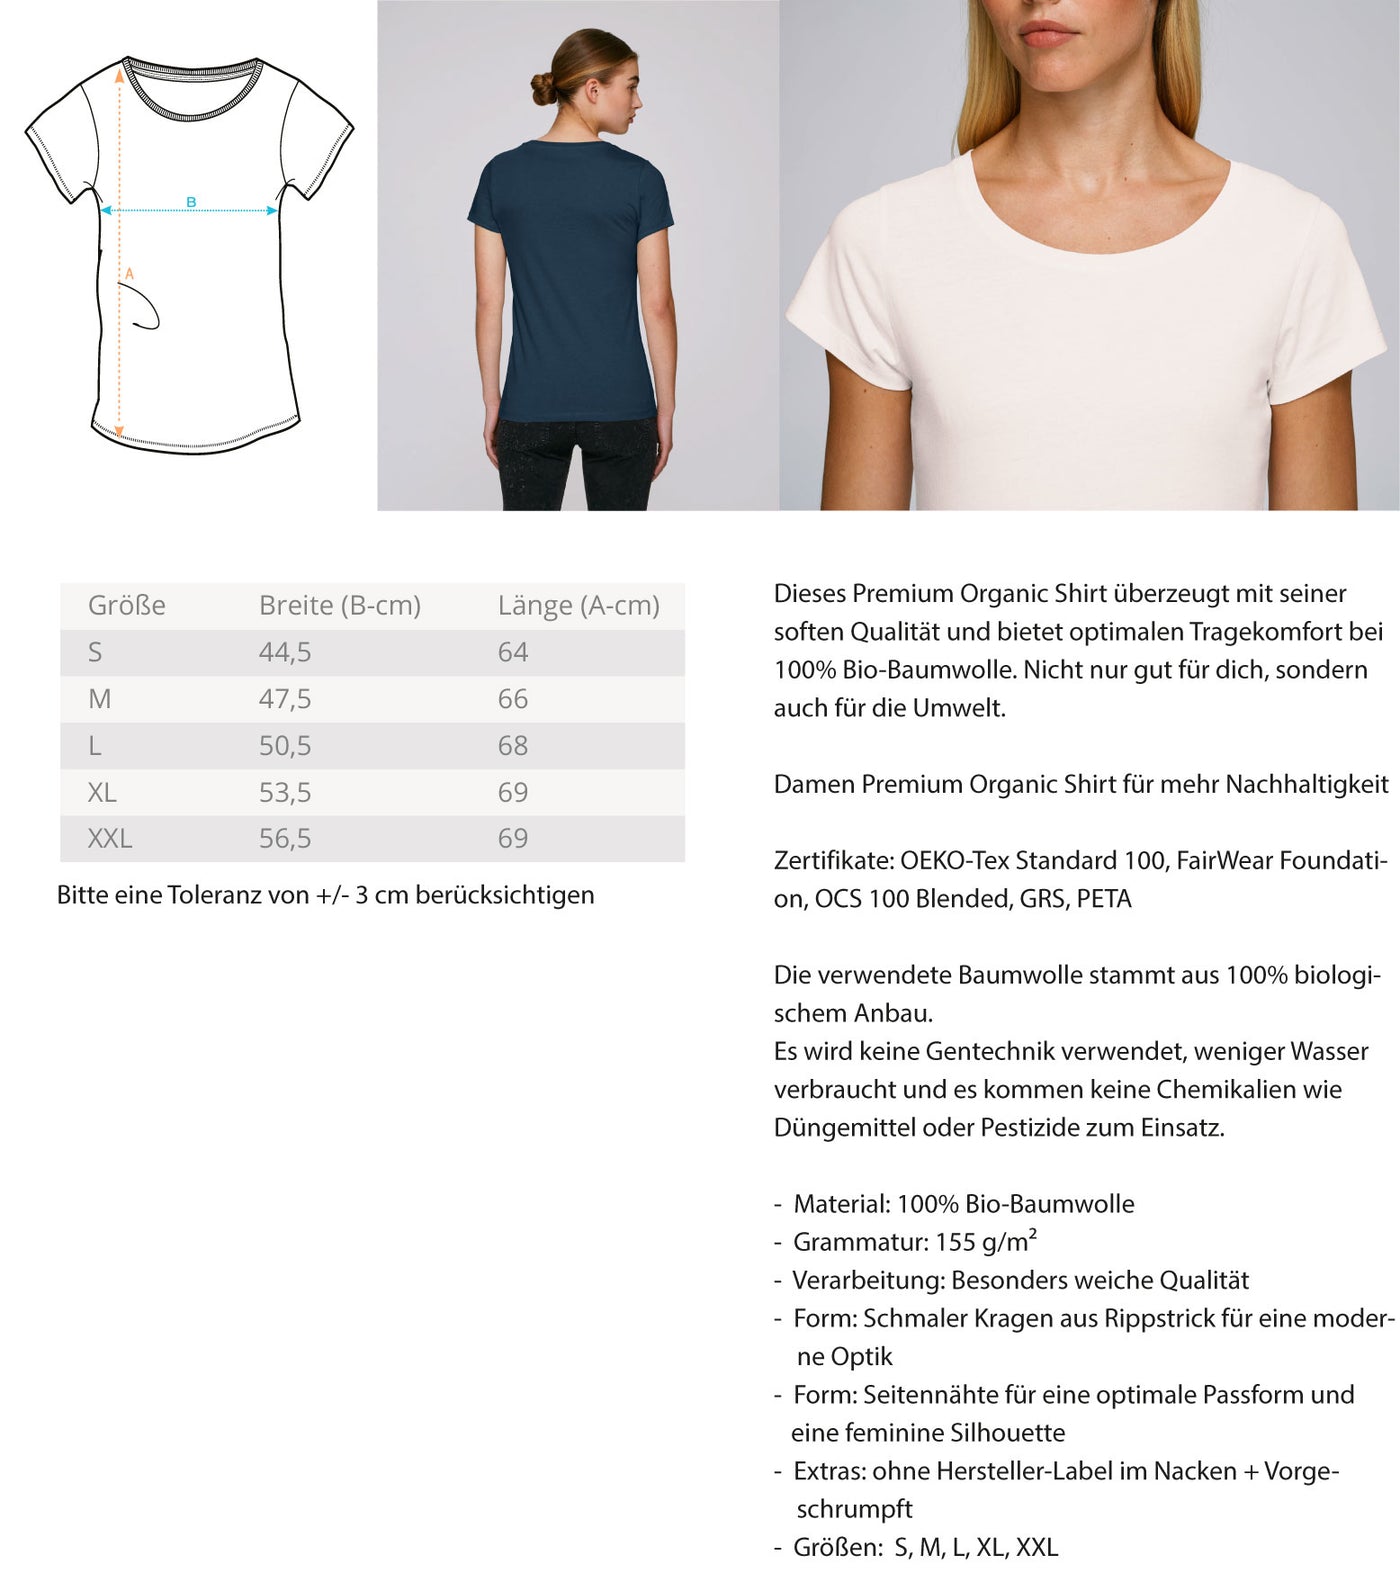 Almkönigin - Damen Premium Organic T-Shirt wandern